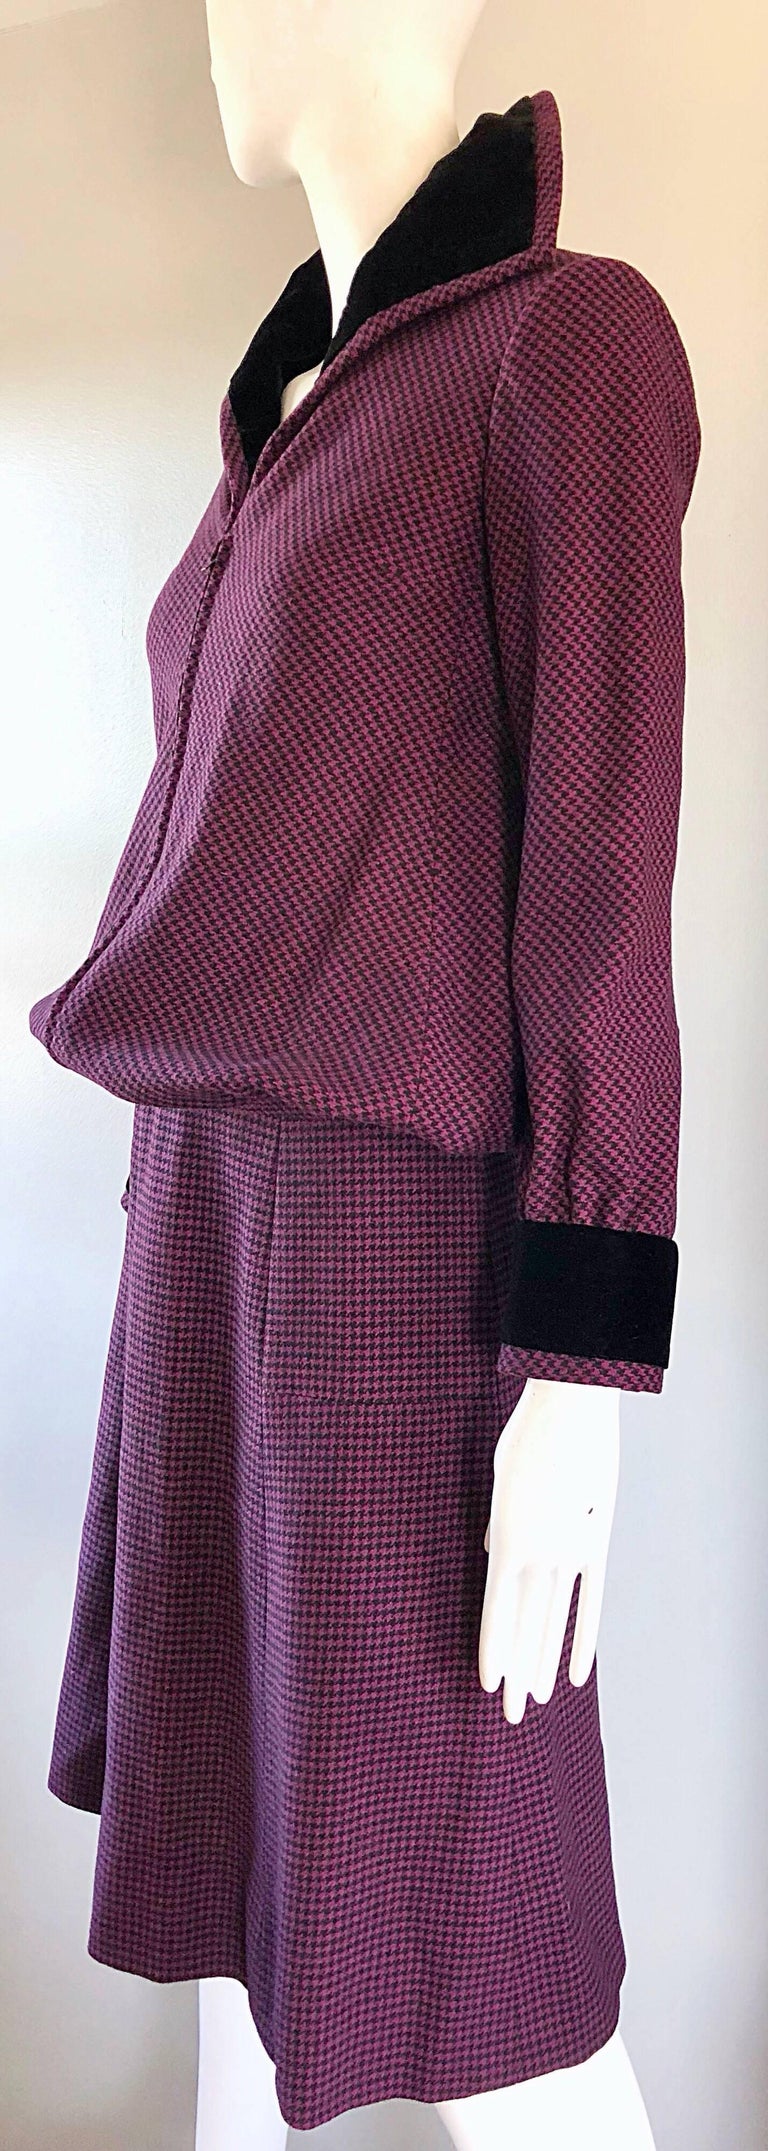 Cardinali 1970s Original Sample Purple + Black Checkered Vintage 70s Skirt Suit  For Sale 1